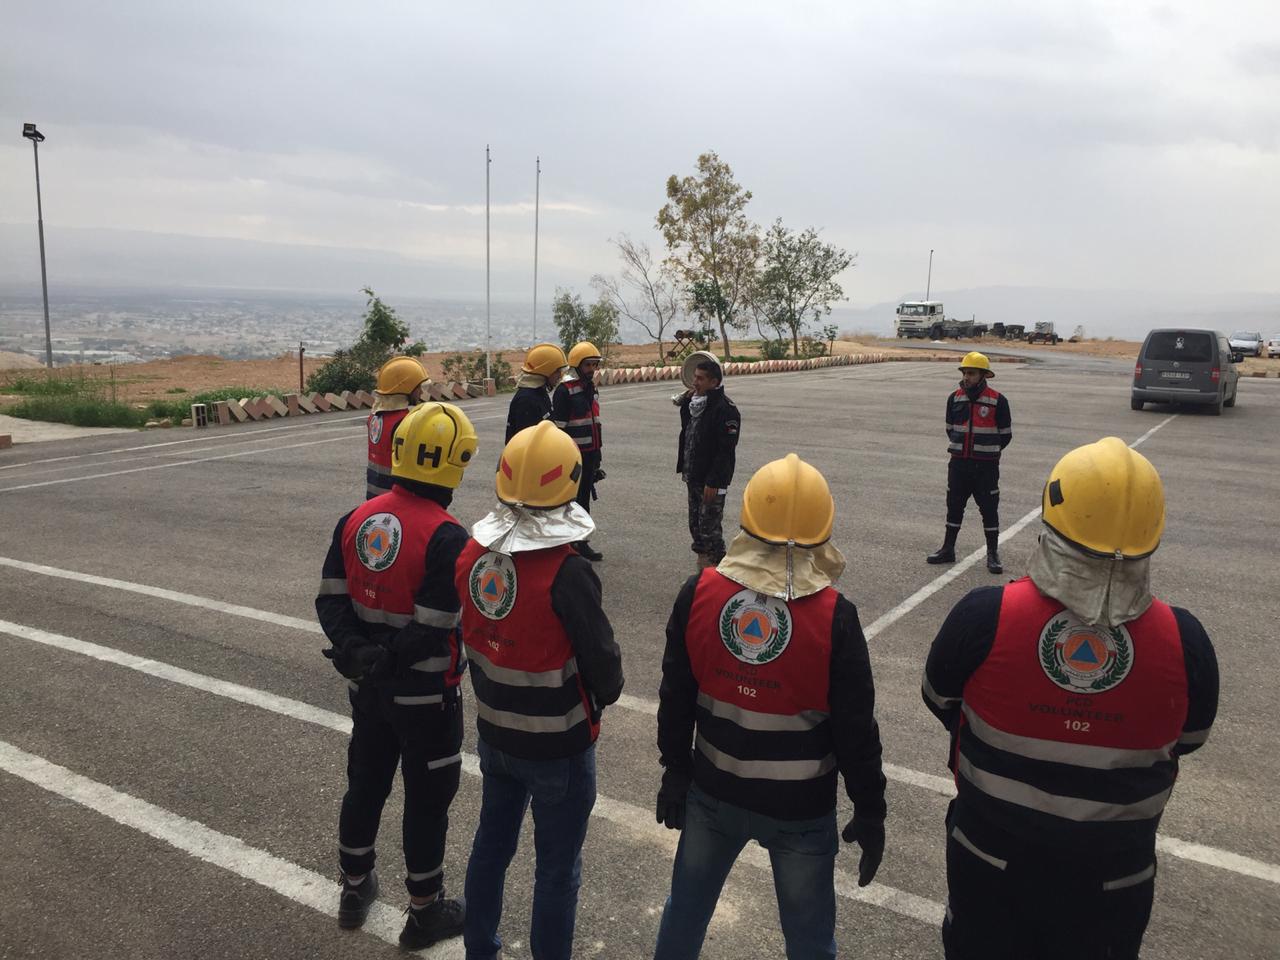 Royal Company participates in the search and rescue center course